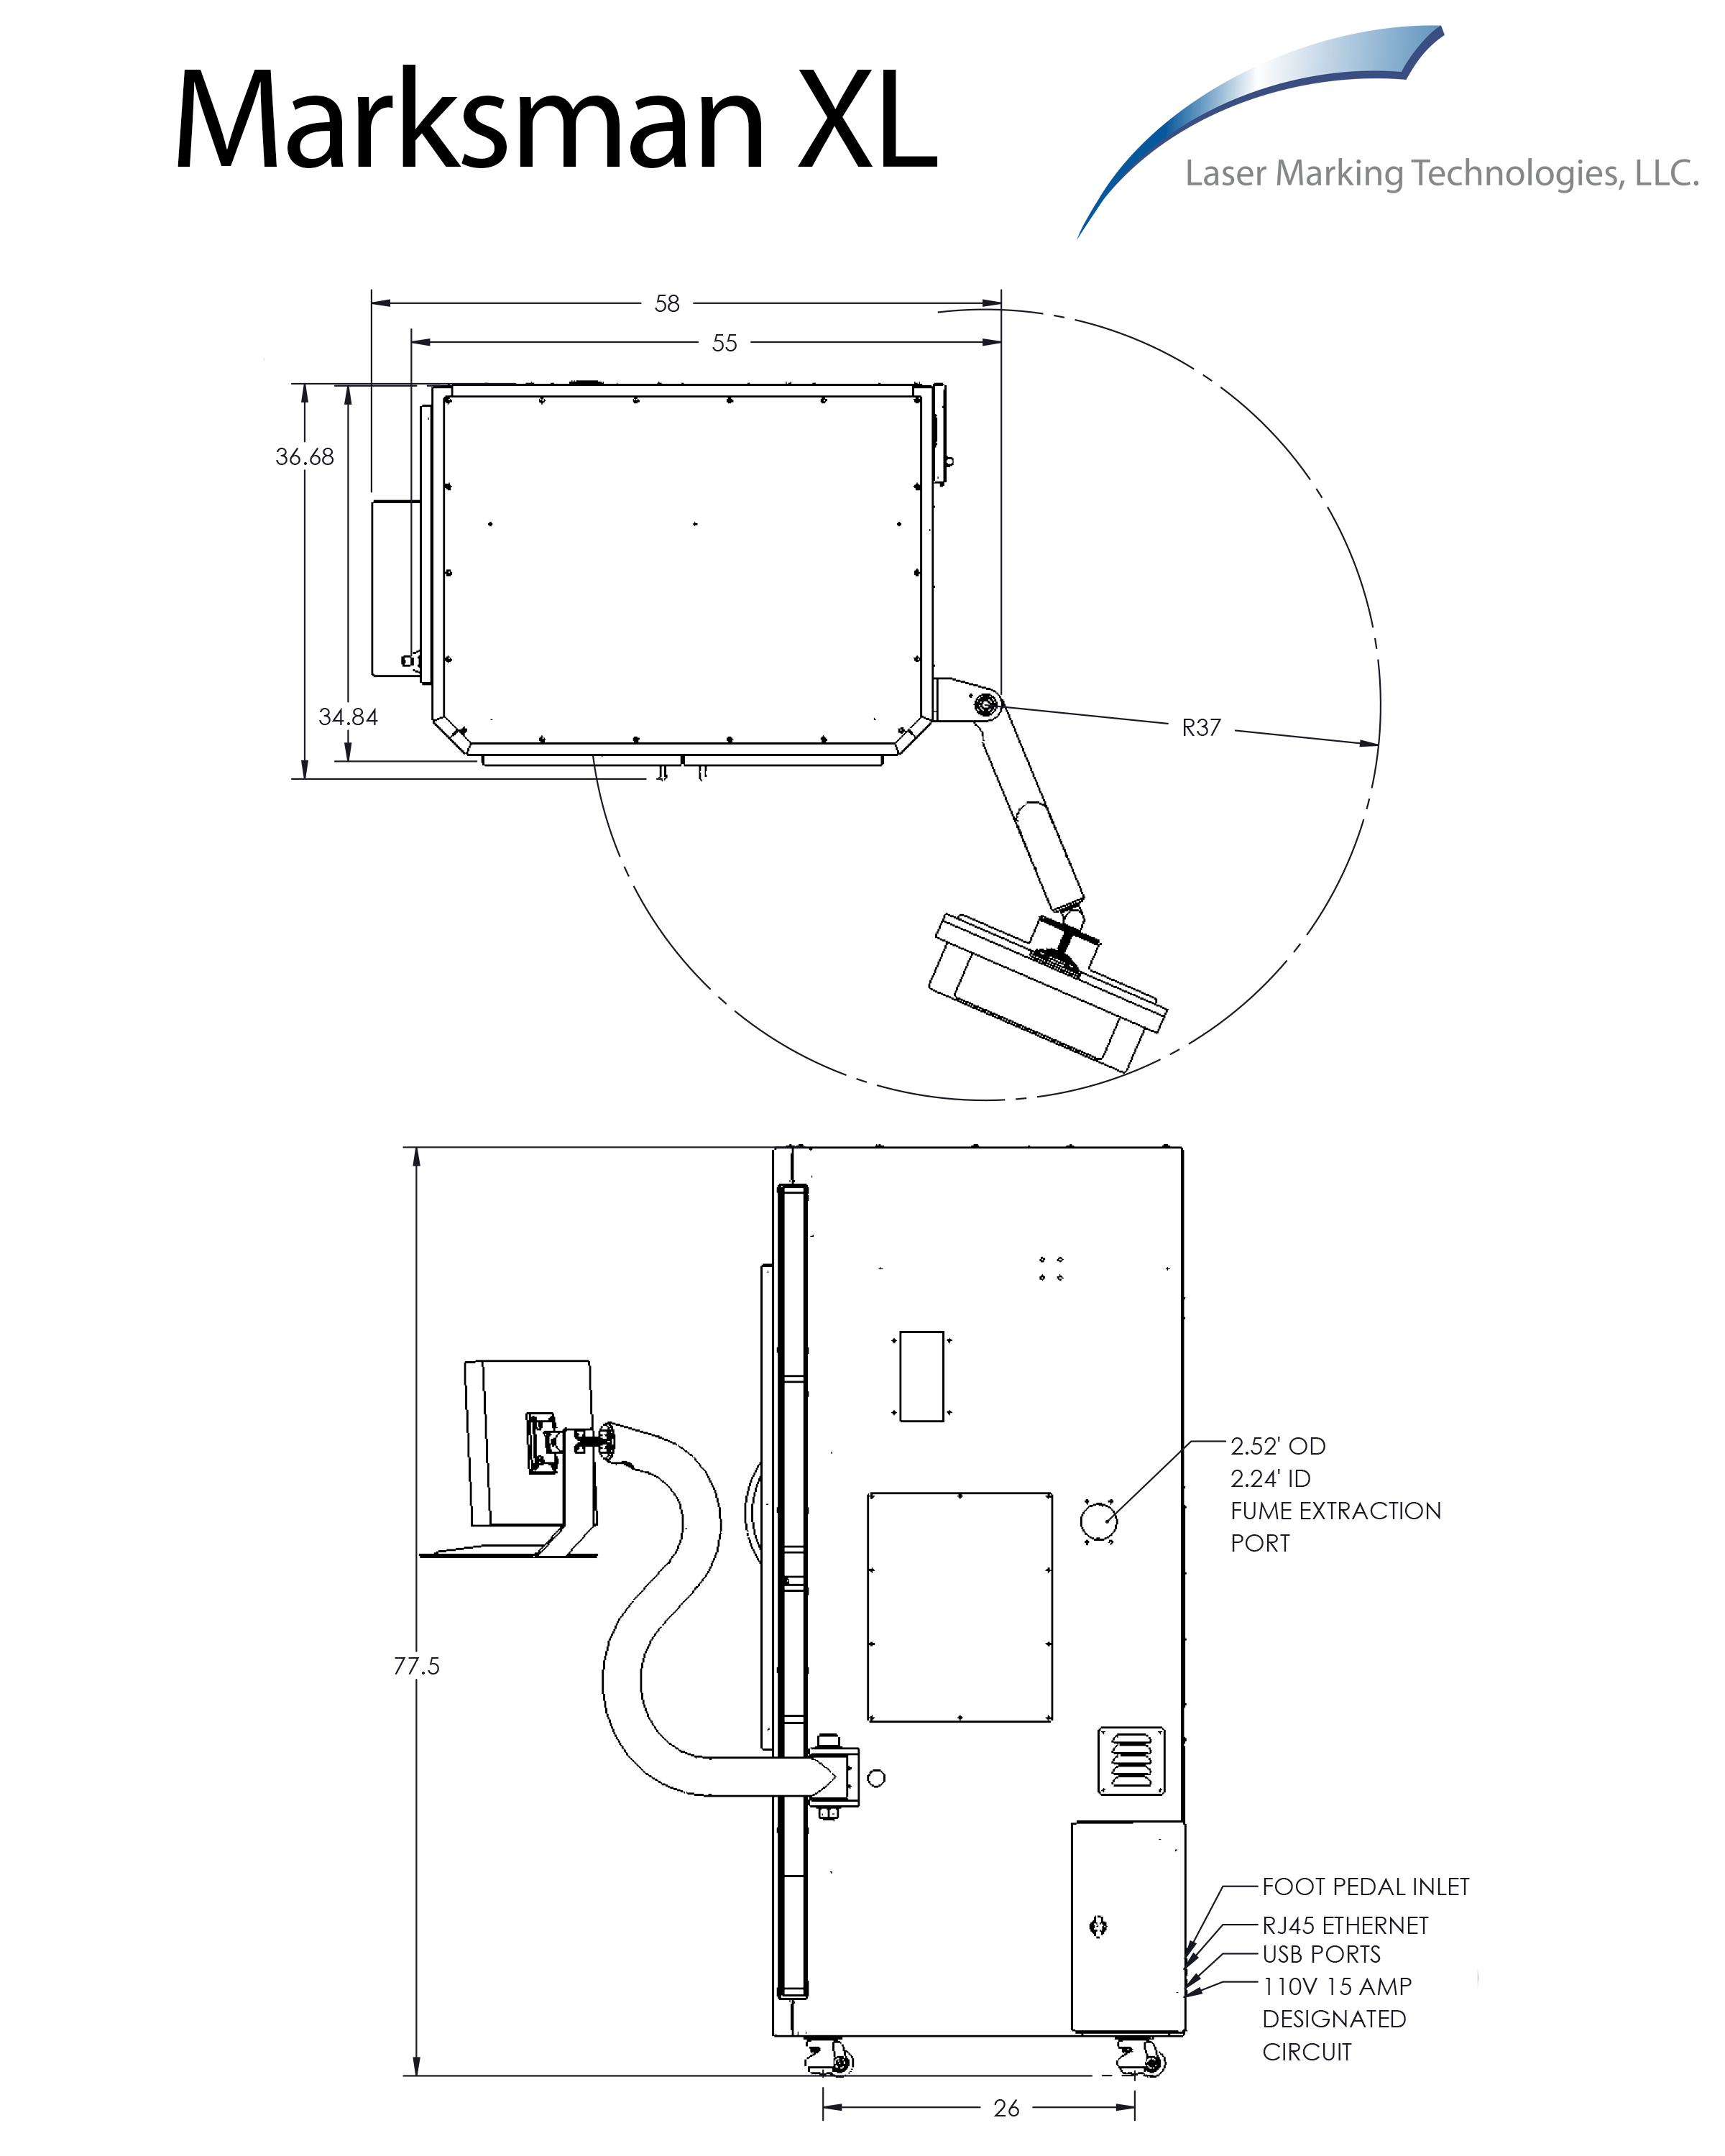 Marksman XL laser marking machine diagram and layout